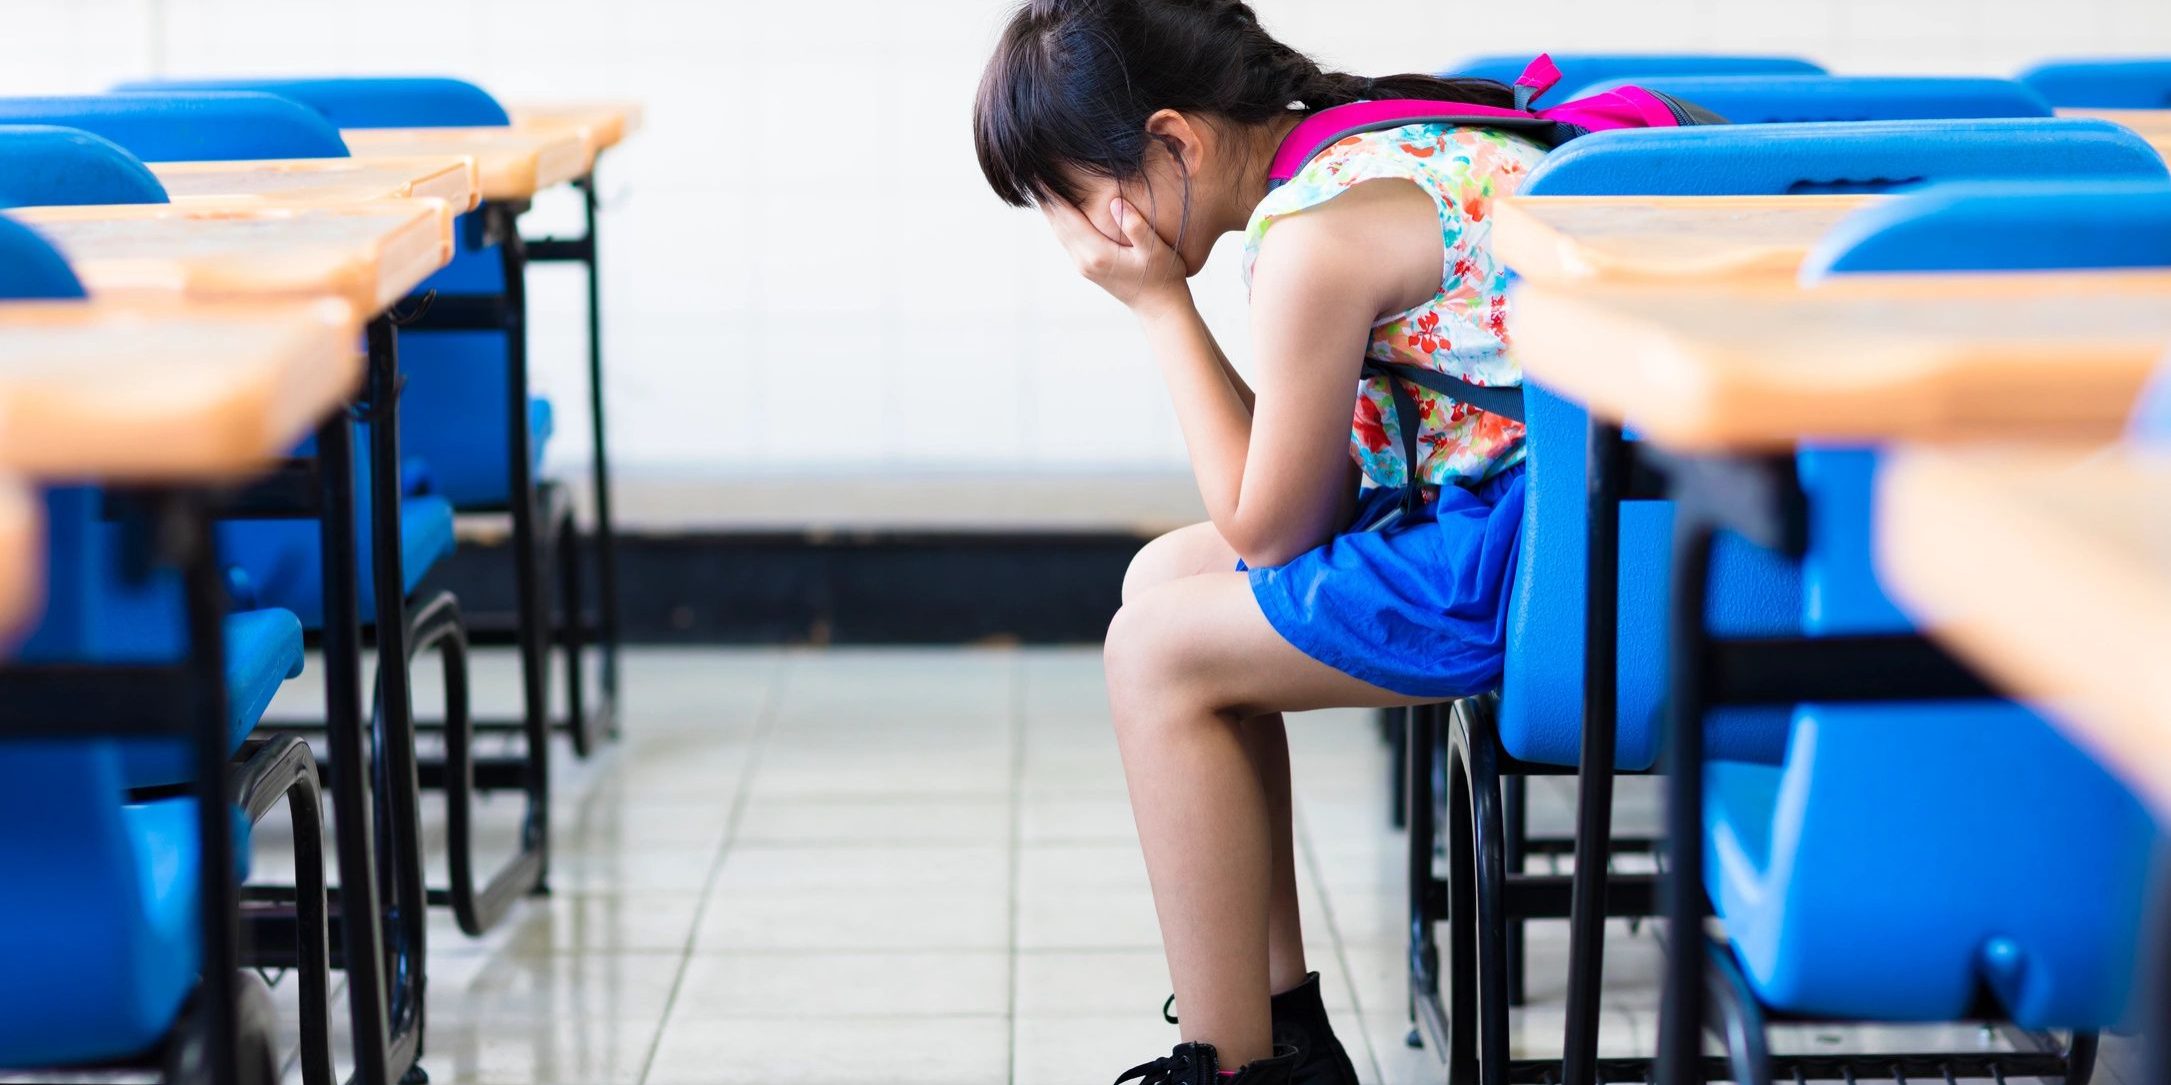 A sad girl sitting inside a classroom